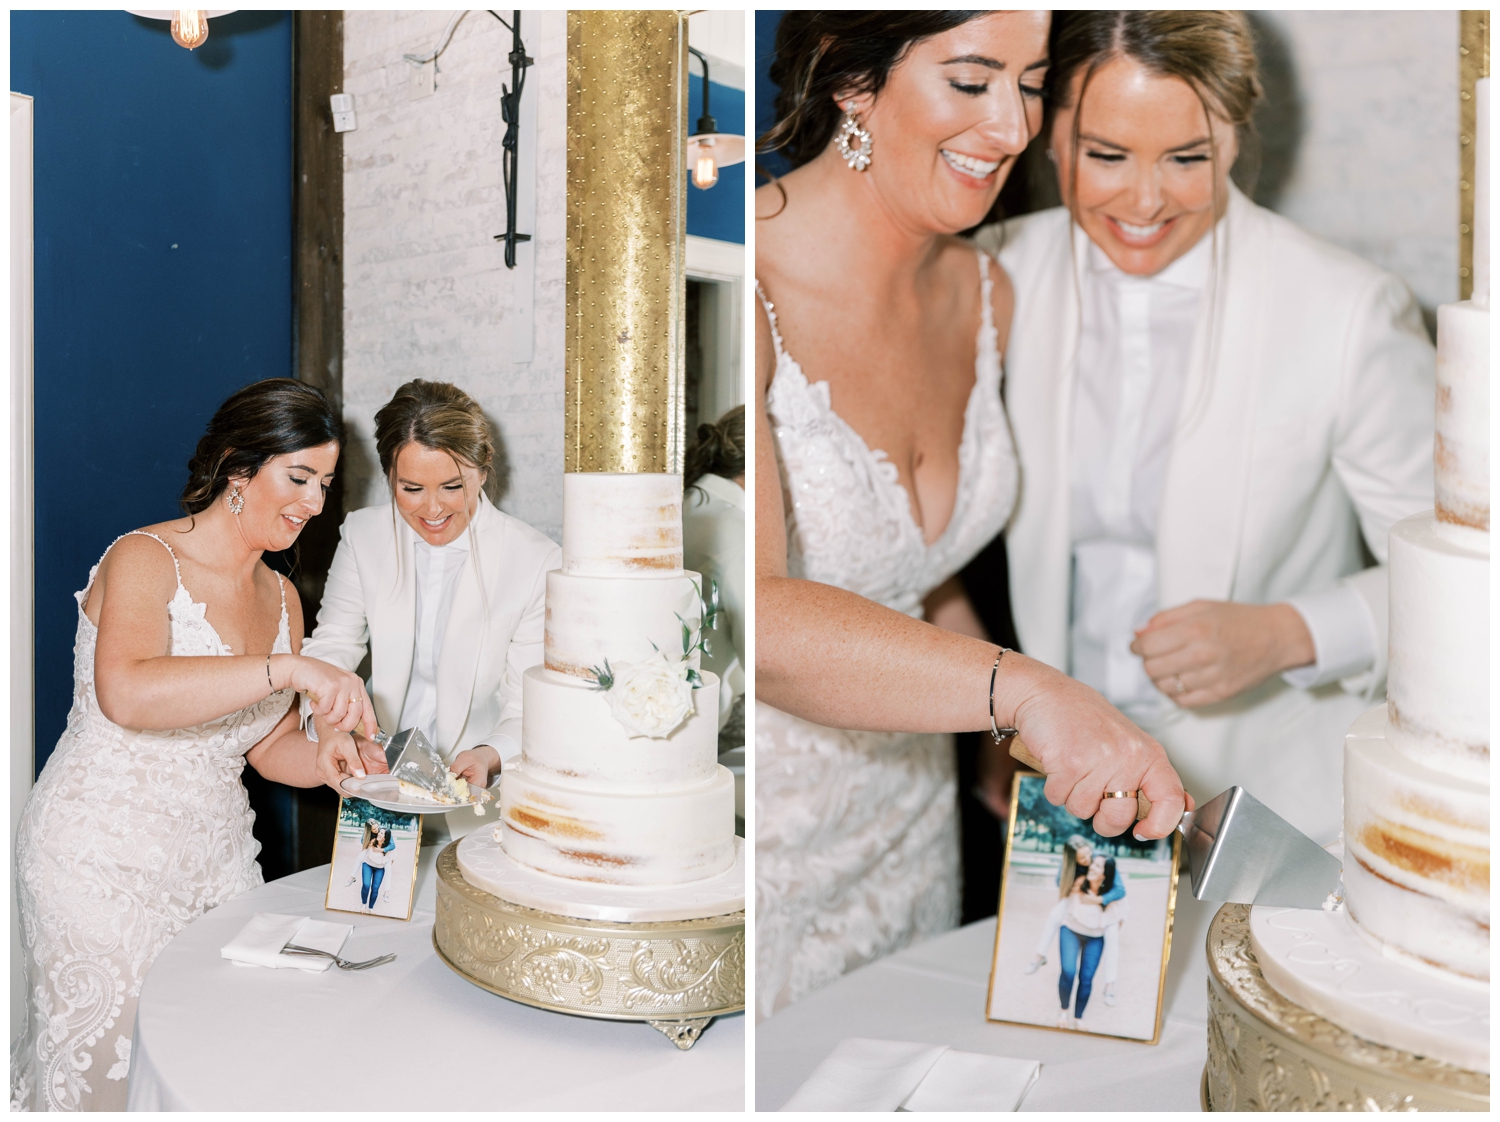 cake cutting Hughes Manor wedding reception